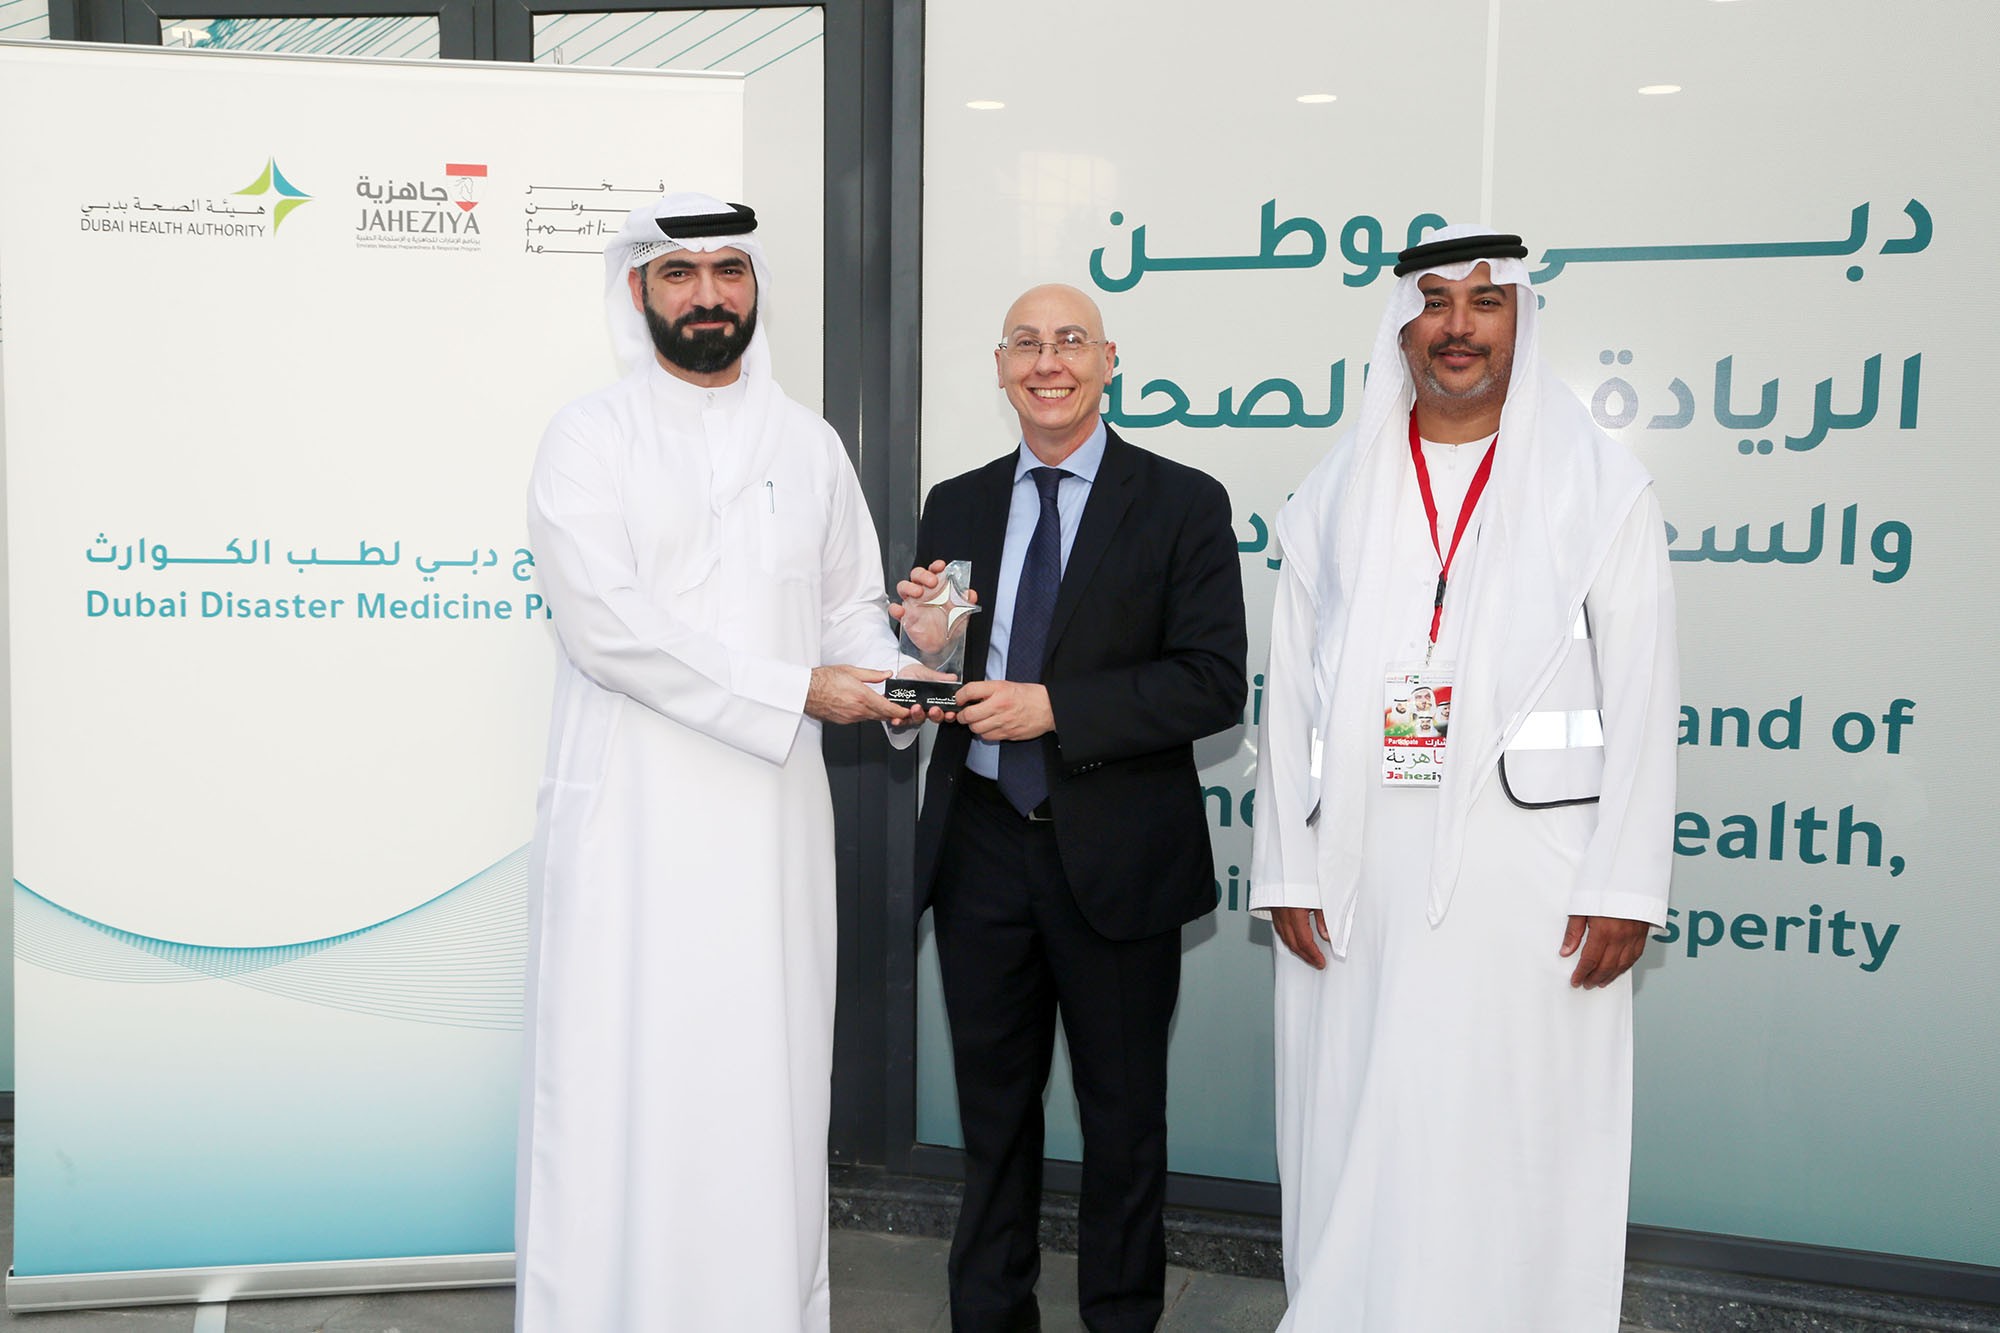 Dubai Health Authority launches internationally accredited Dubai Disaster Medicine Programme